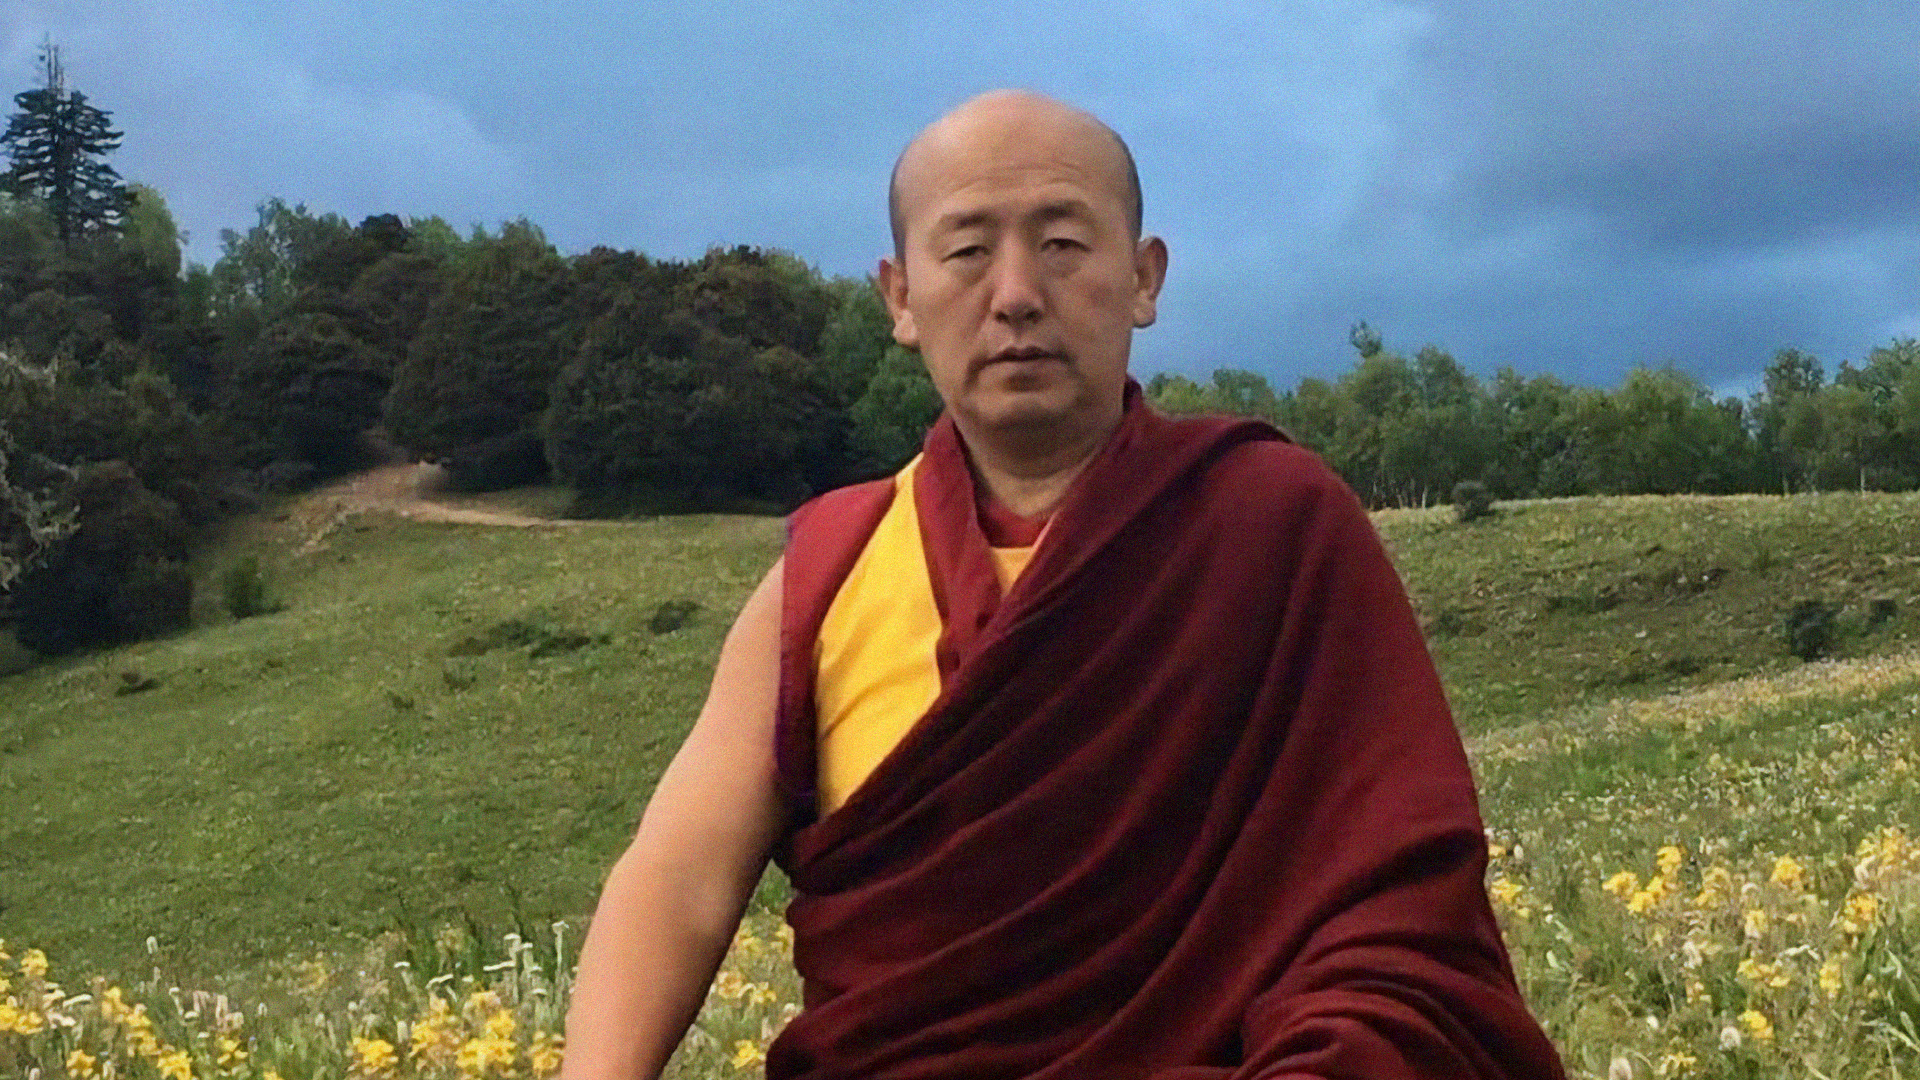 Tibetan Monk Dies in Prison - Free Tibet